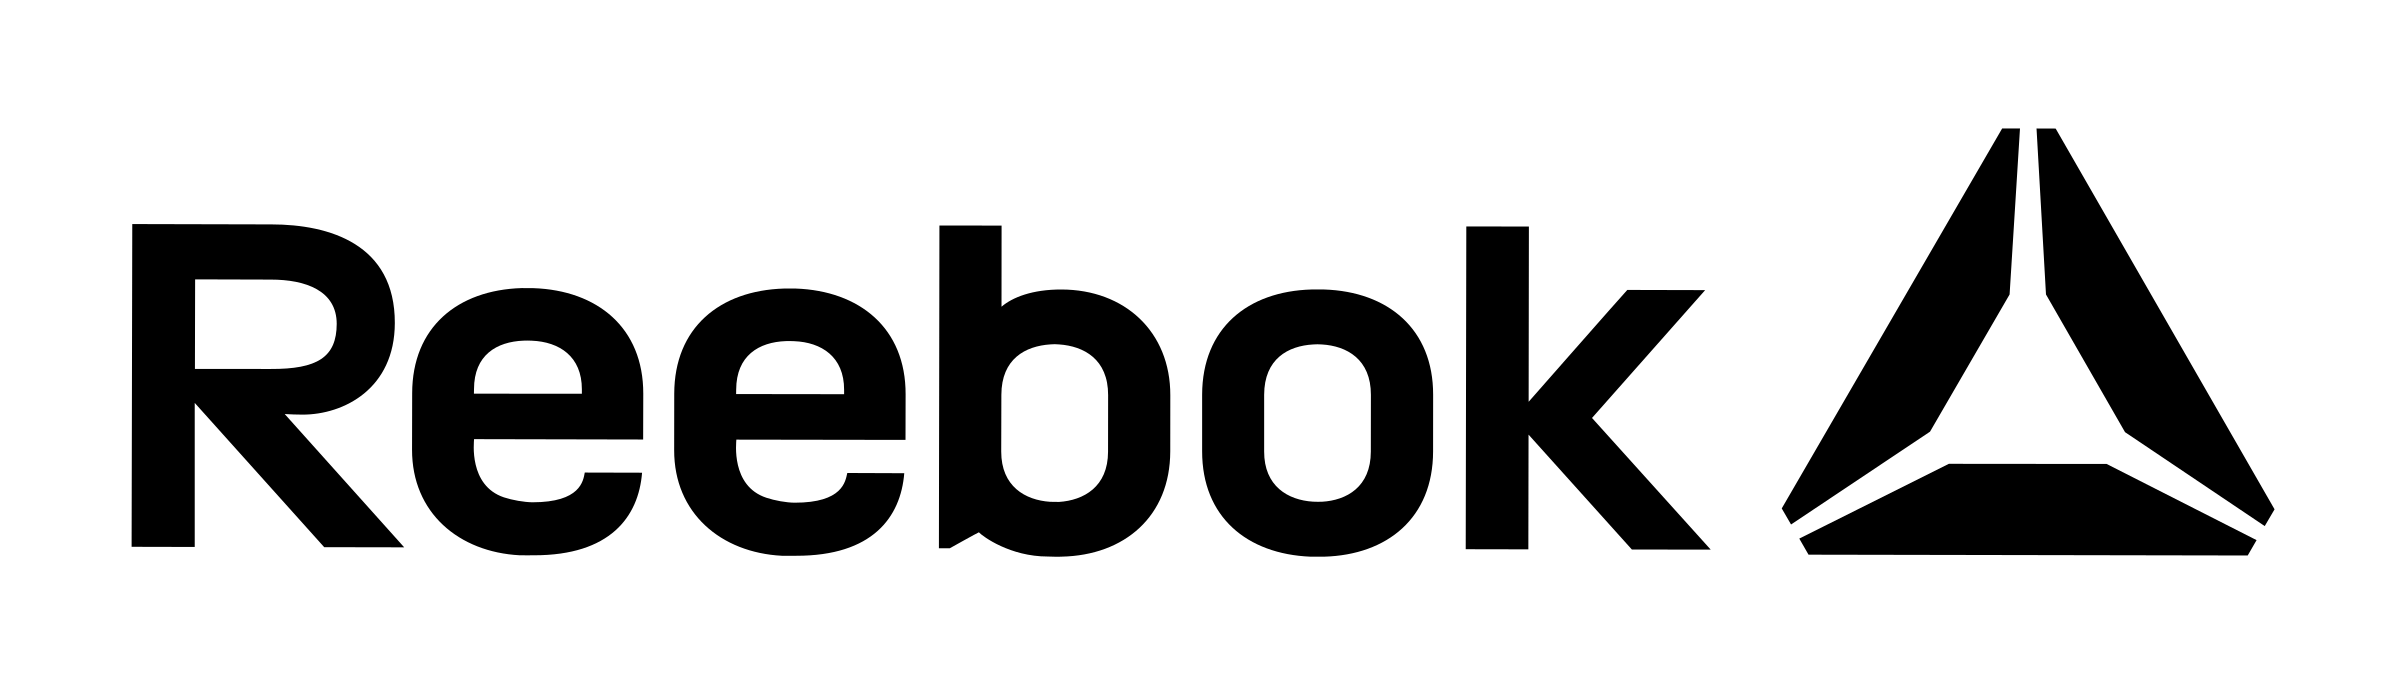 Black Reebok Logo - Reebok Logo PNG Transparent & SVG Vector - Freebie Supply